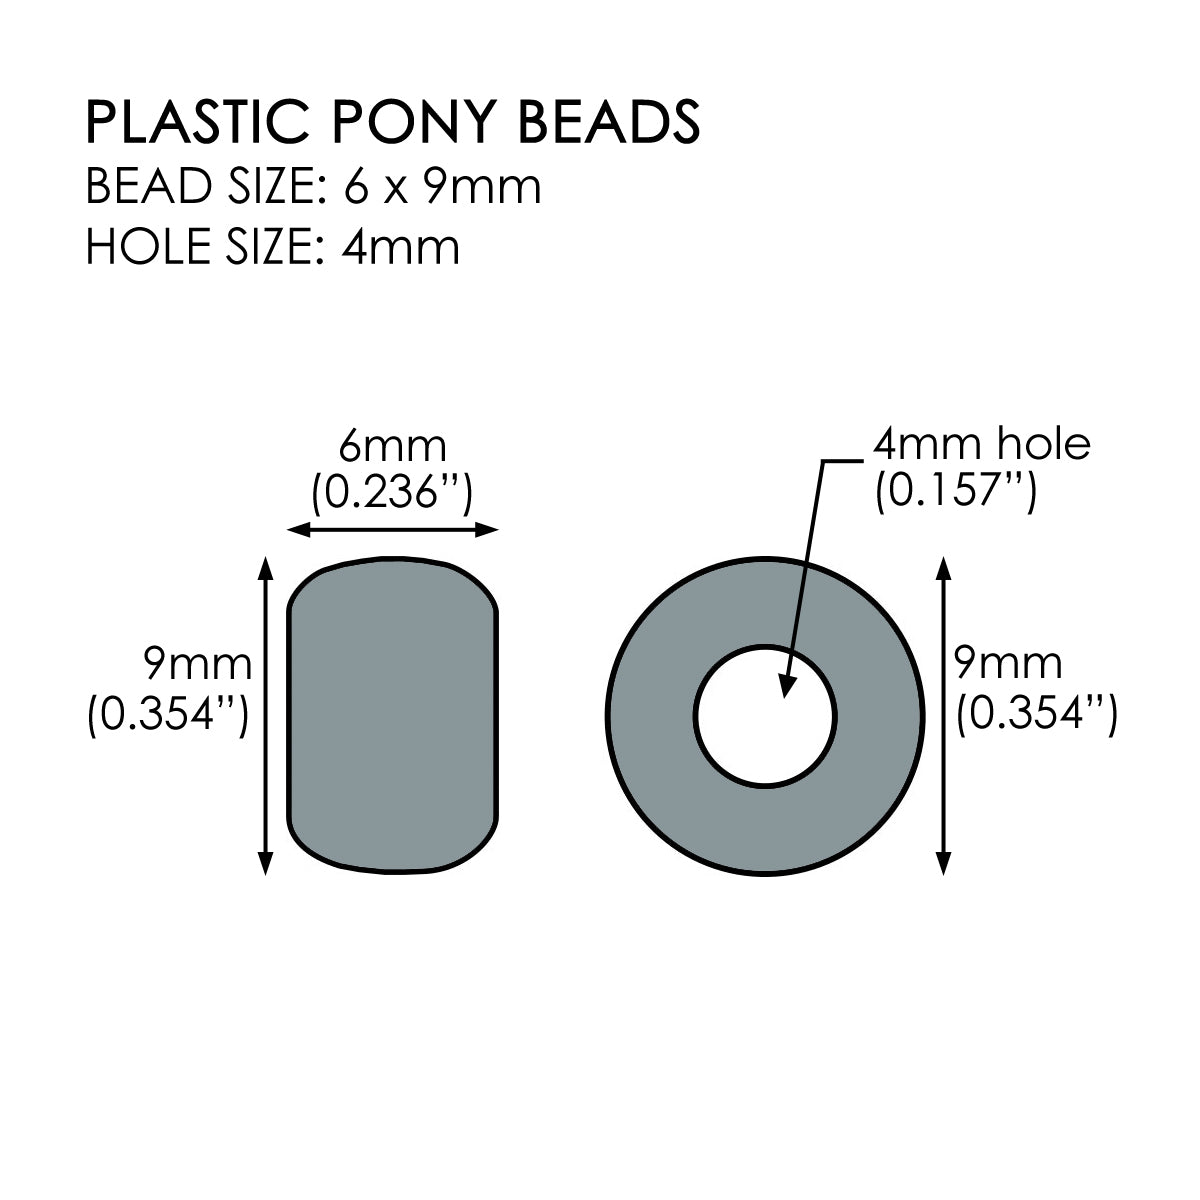 Black Tie Mix Plastic Craft Pony Beads 6x9mm Bulk Pack - Pony Bead